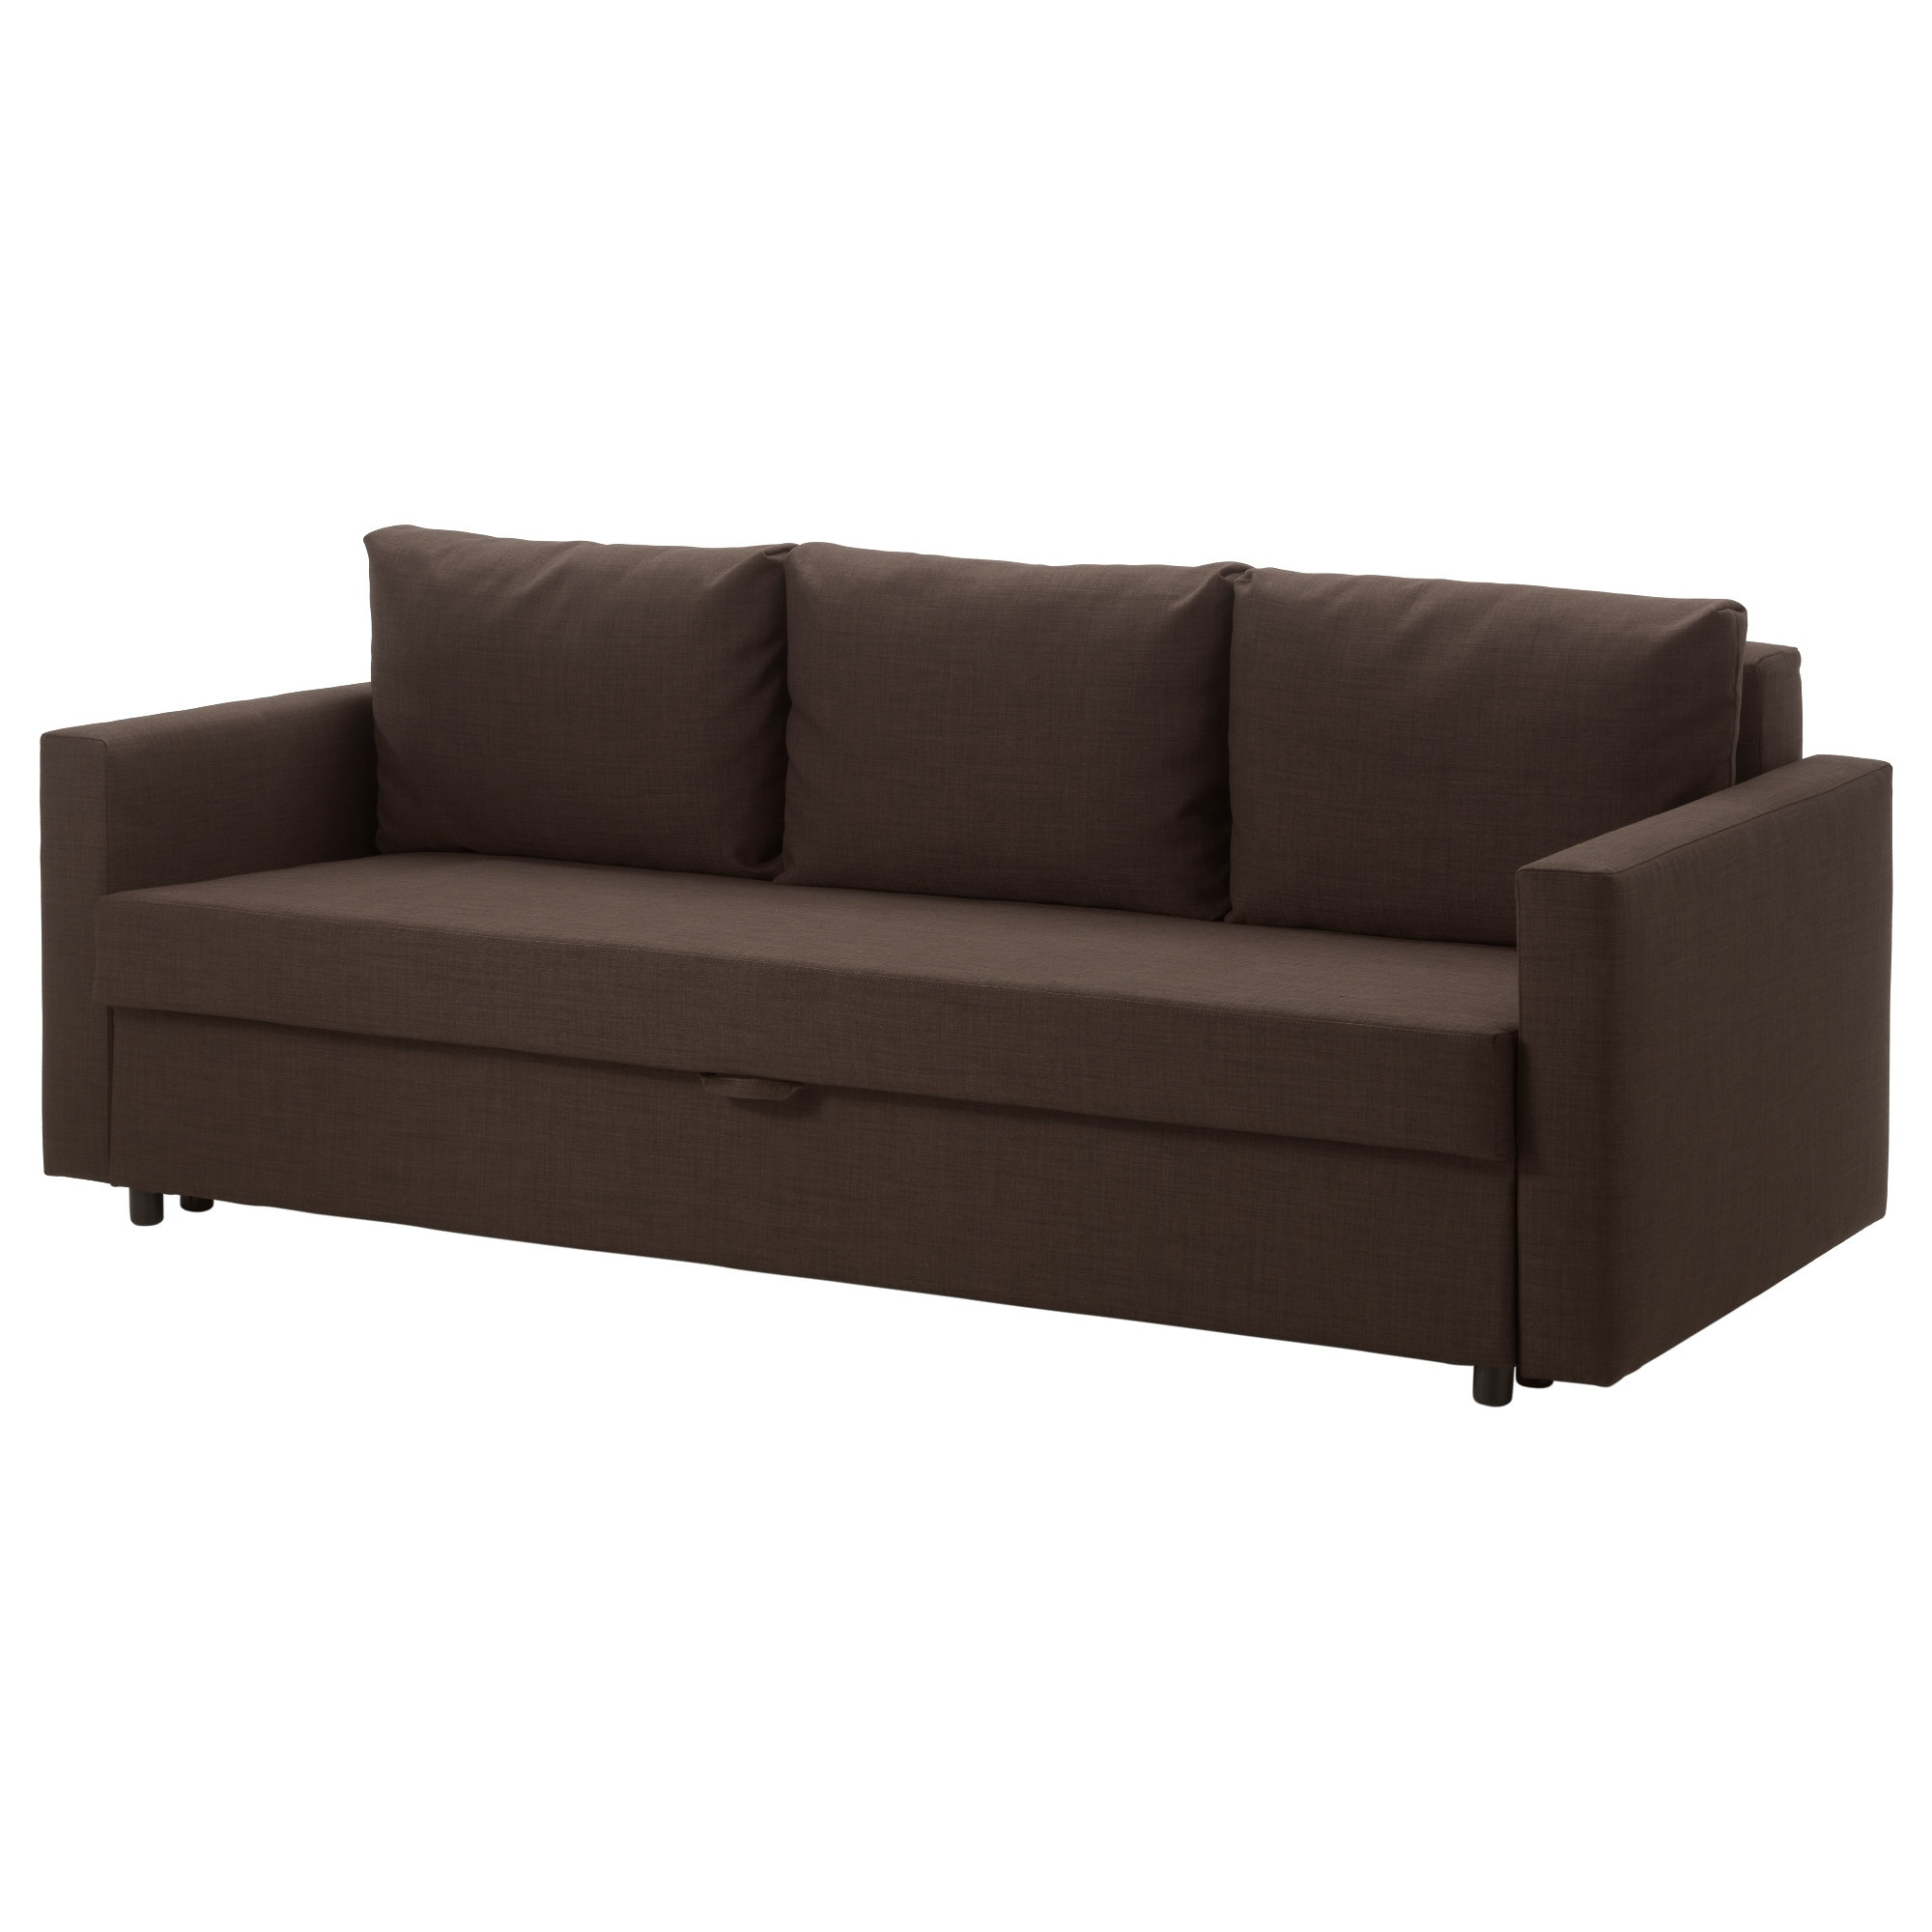 Best ideas about Ikea Sleeper Sofa
. Save or Pin FRIHETEN Three seat sofa bed Skiftebo brown IKEA Now.